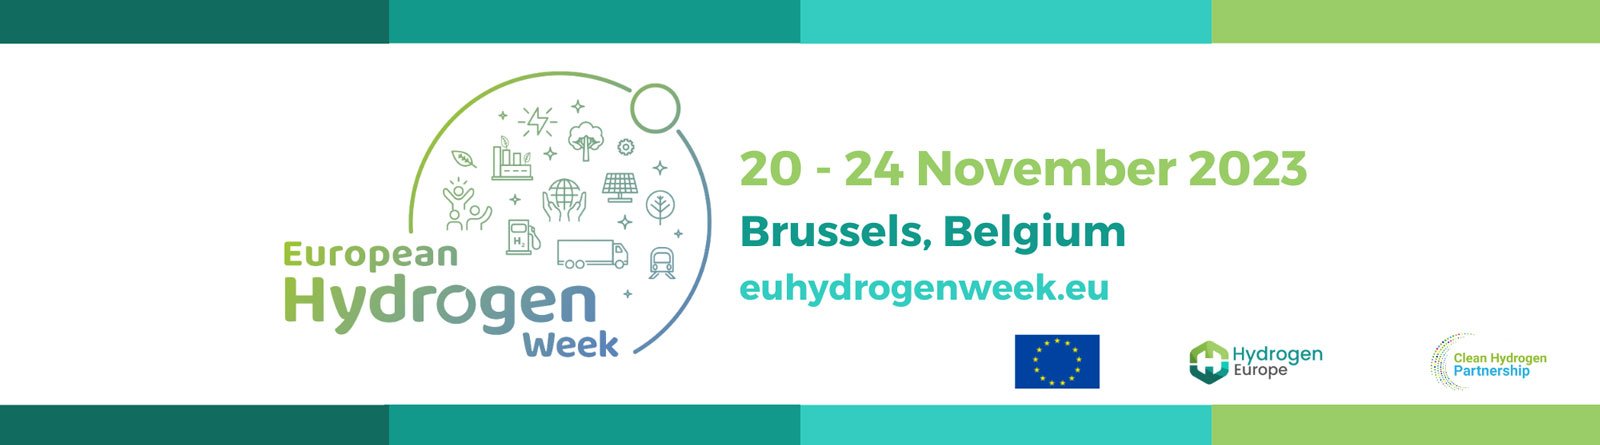 European Hydrogen Week 2023 - Bruxelles